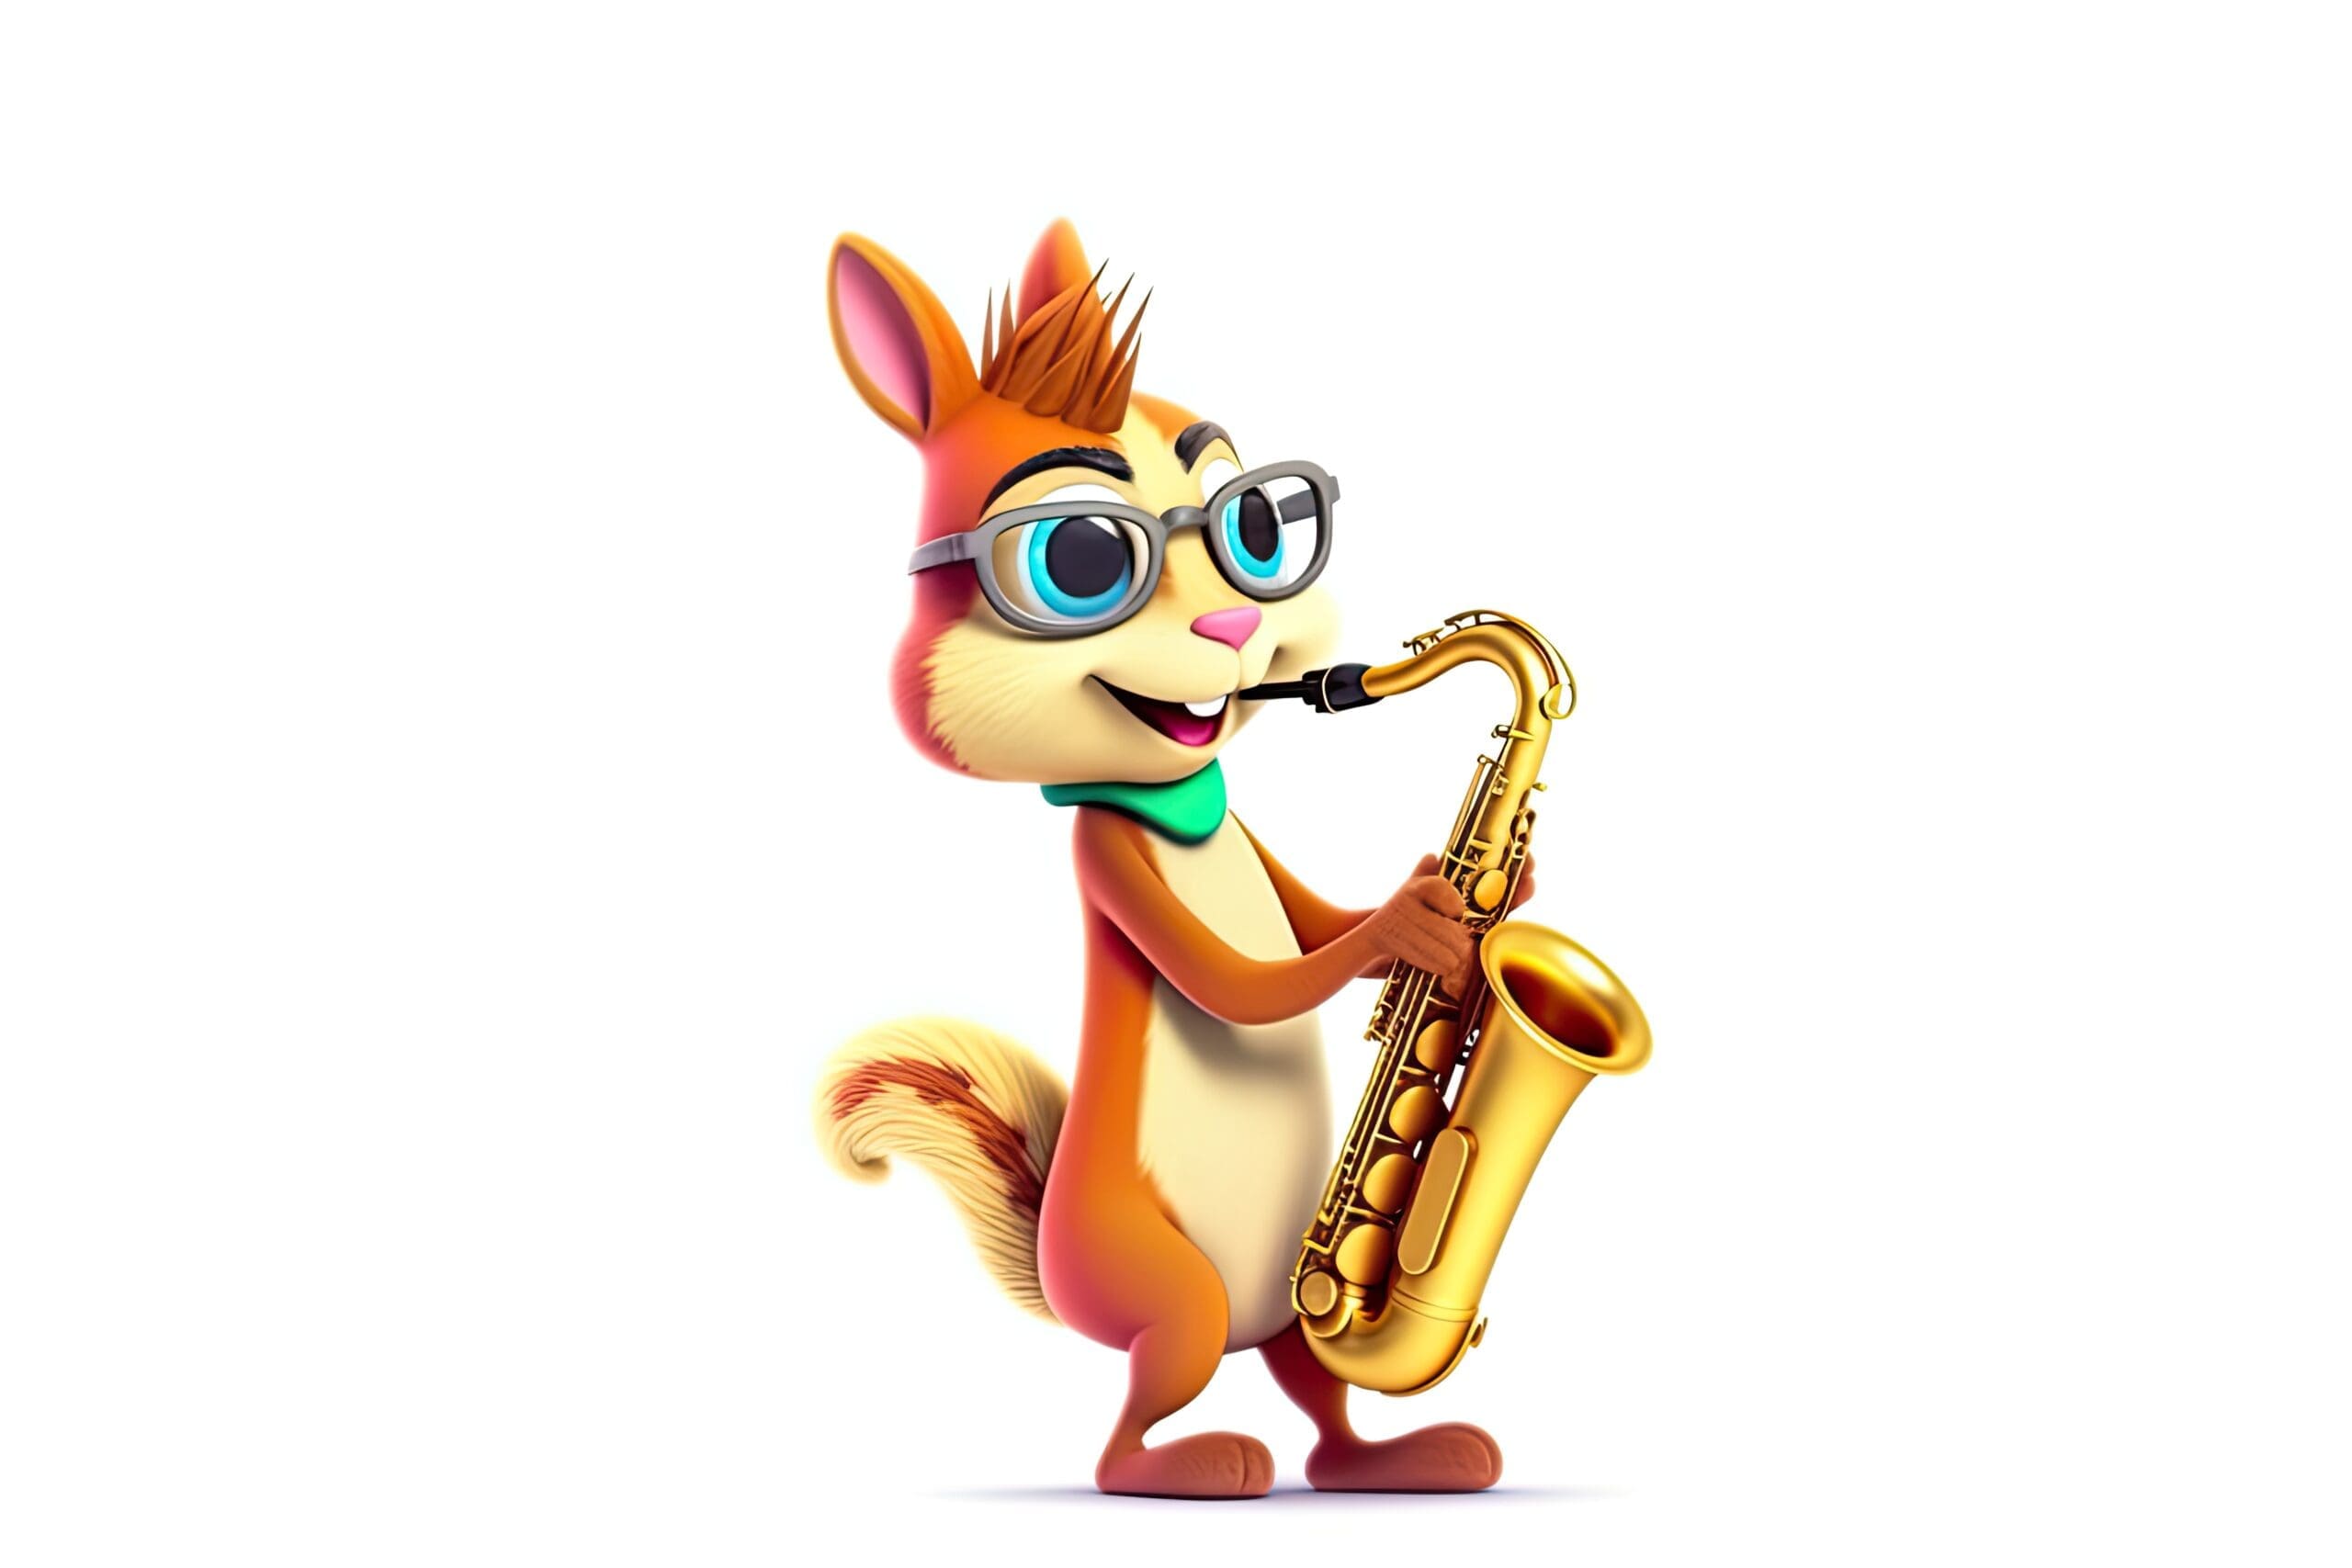 Cartoon graphic of a kangaroo playing a saxophone.